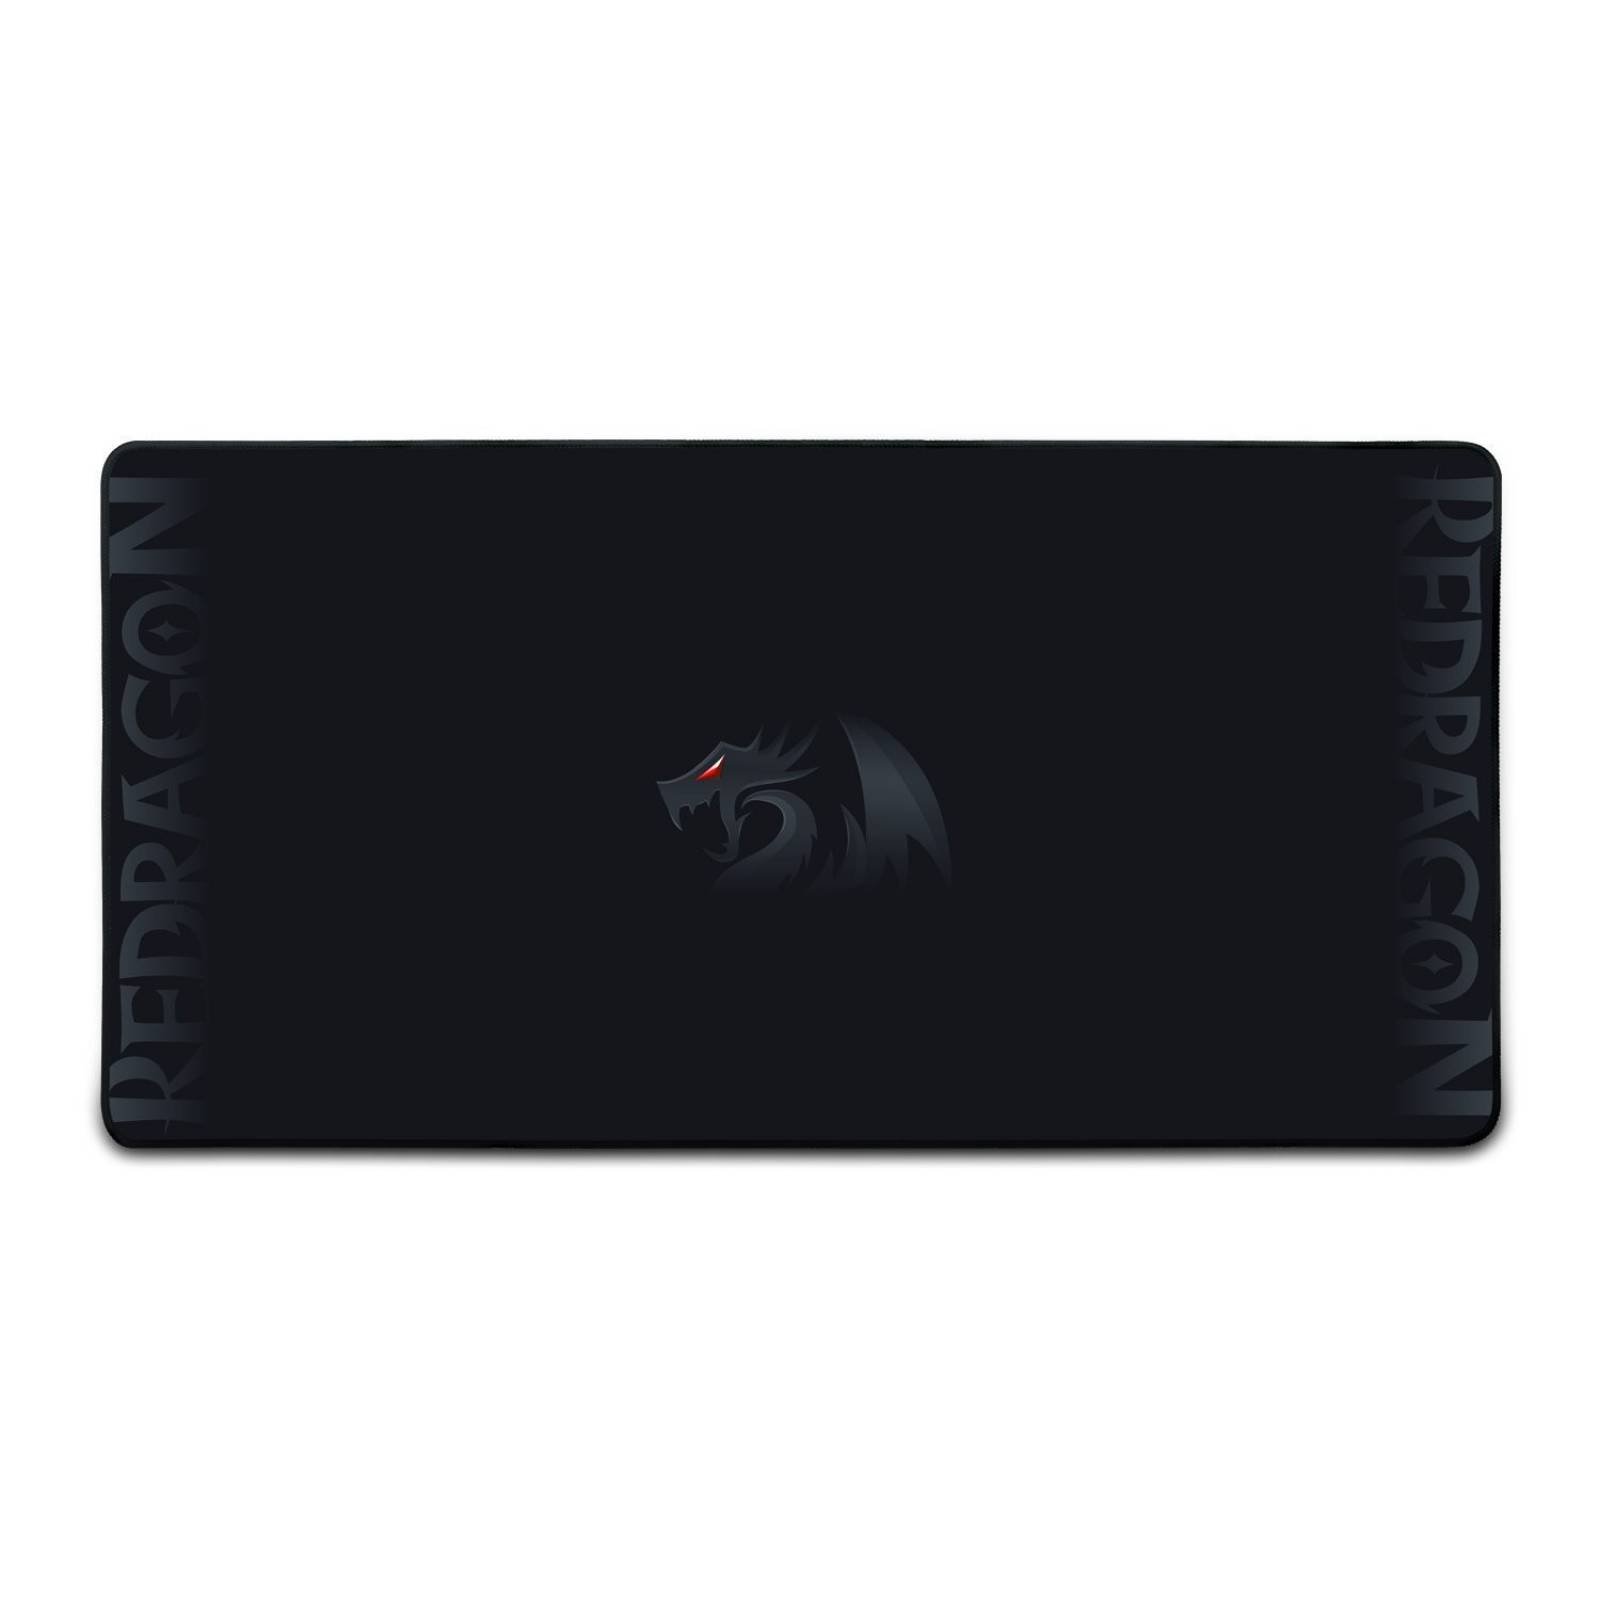 Mouse Pad Gaming Redragon Xl Medidas 27.6x13.6 Pulg -negro